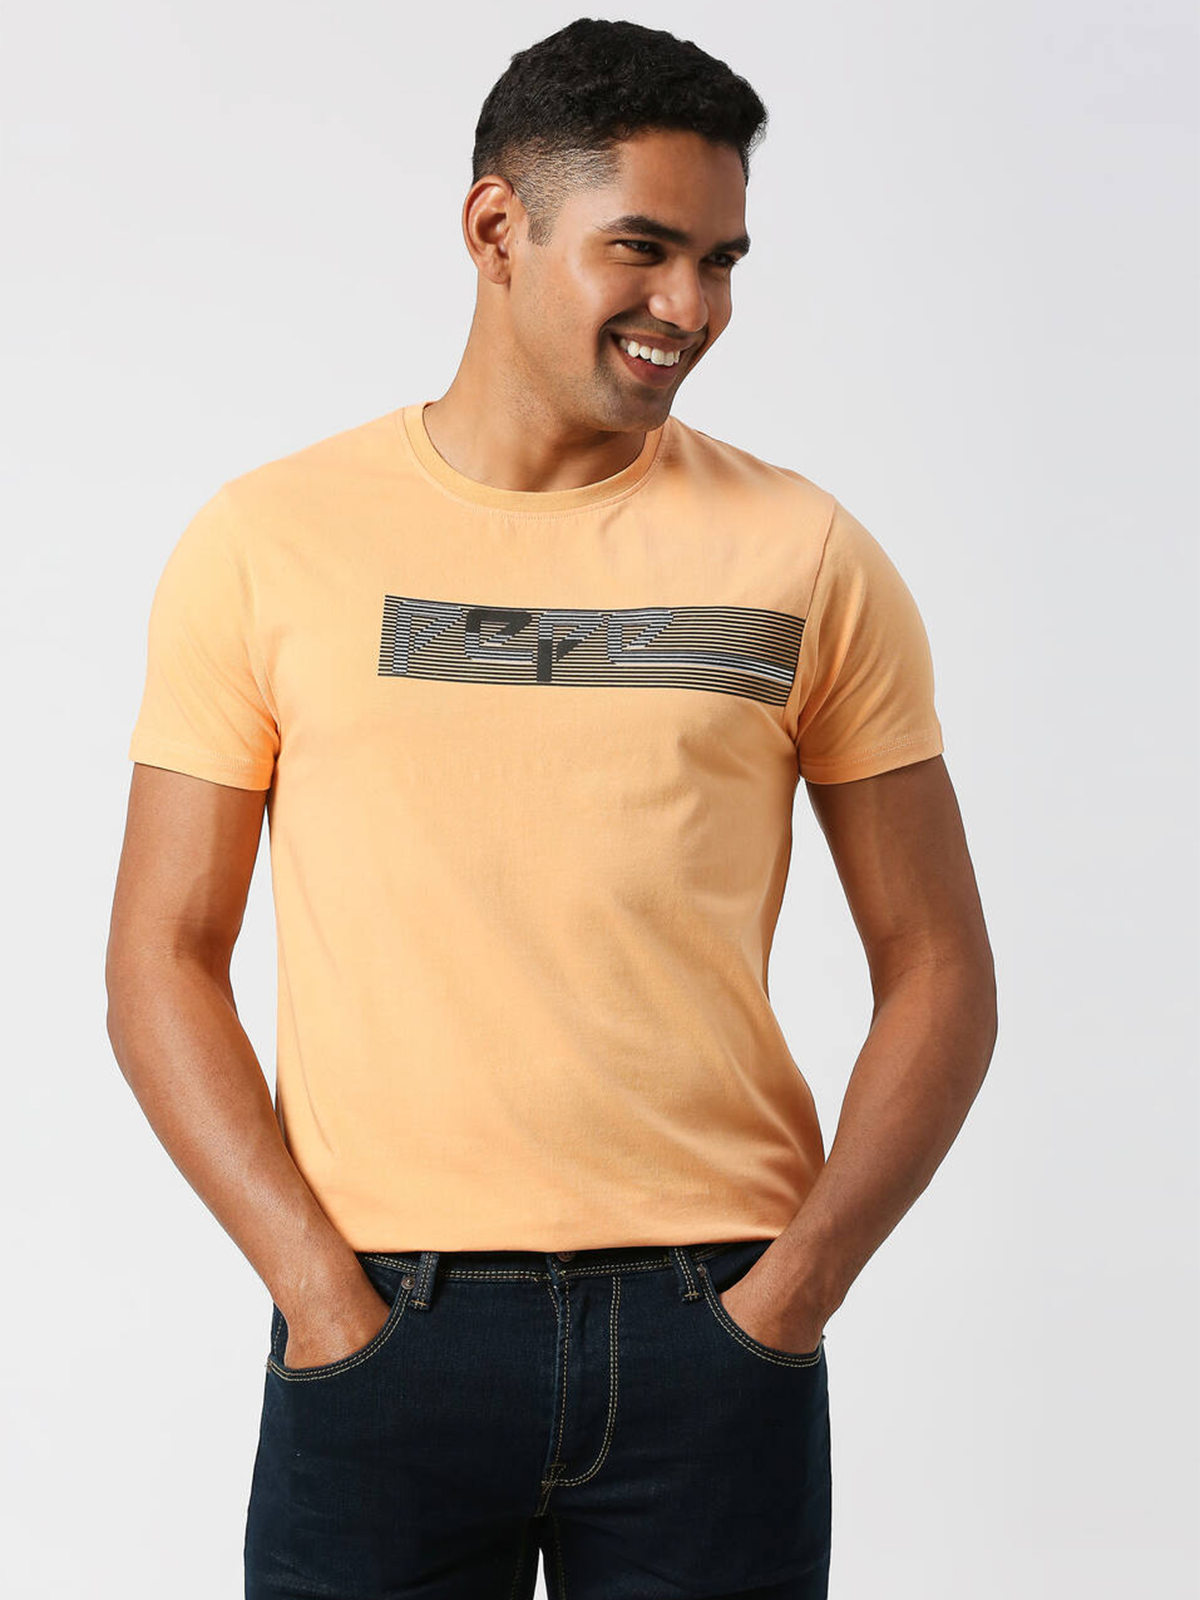 Pepe Jeans peach cotton printed t shirt - G3-MTS15607